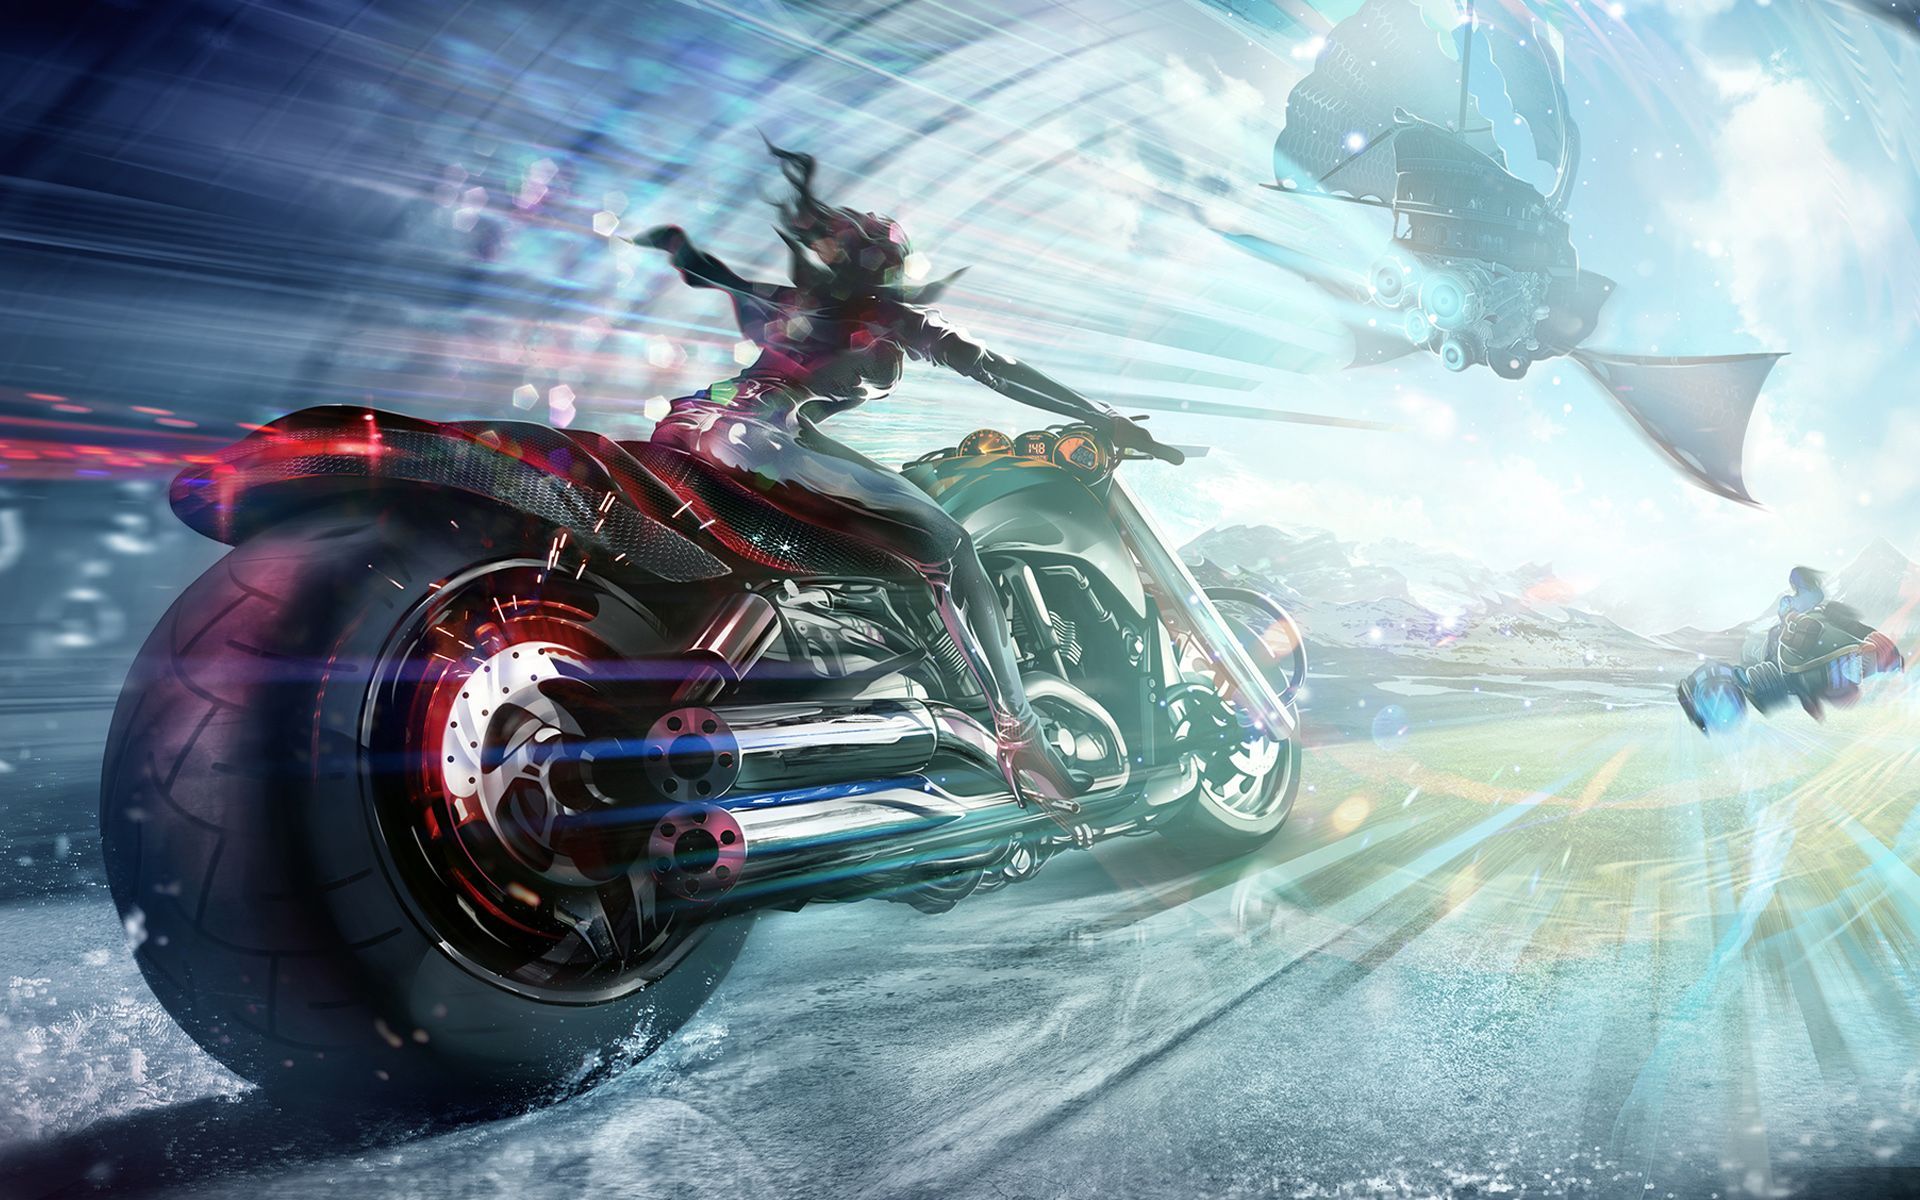 Anime Motorcycle Wallpaper Free Anime Motorcycle